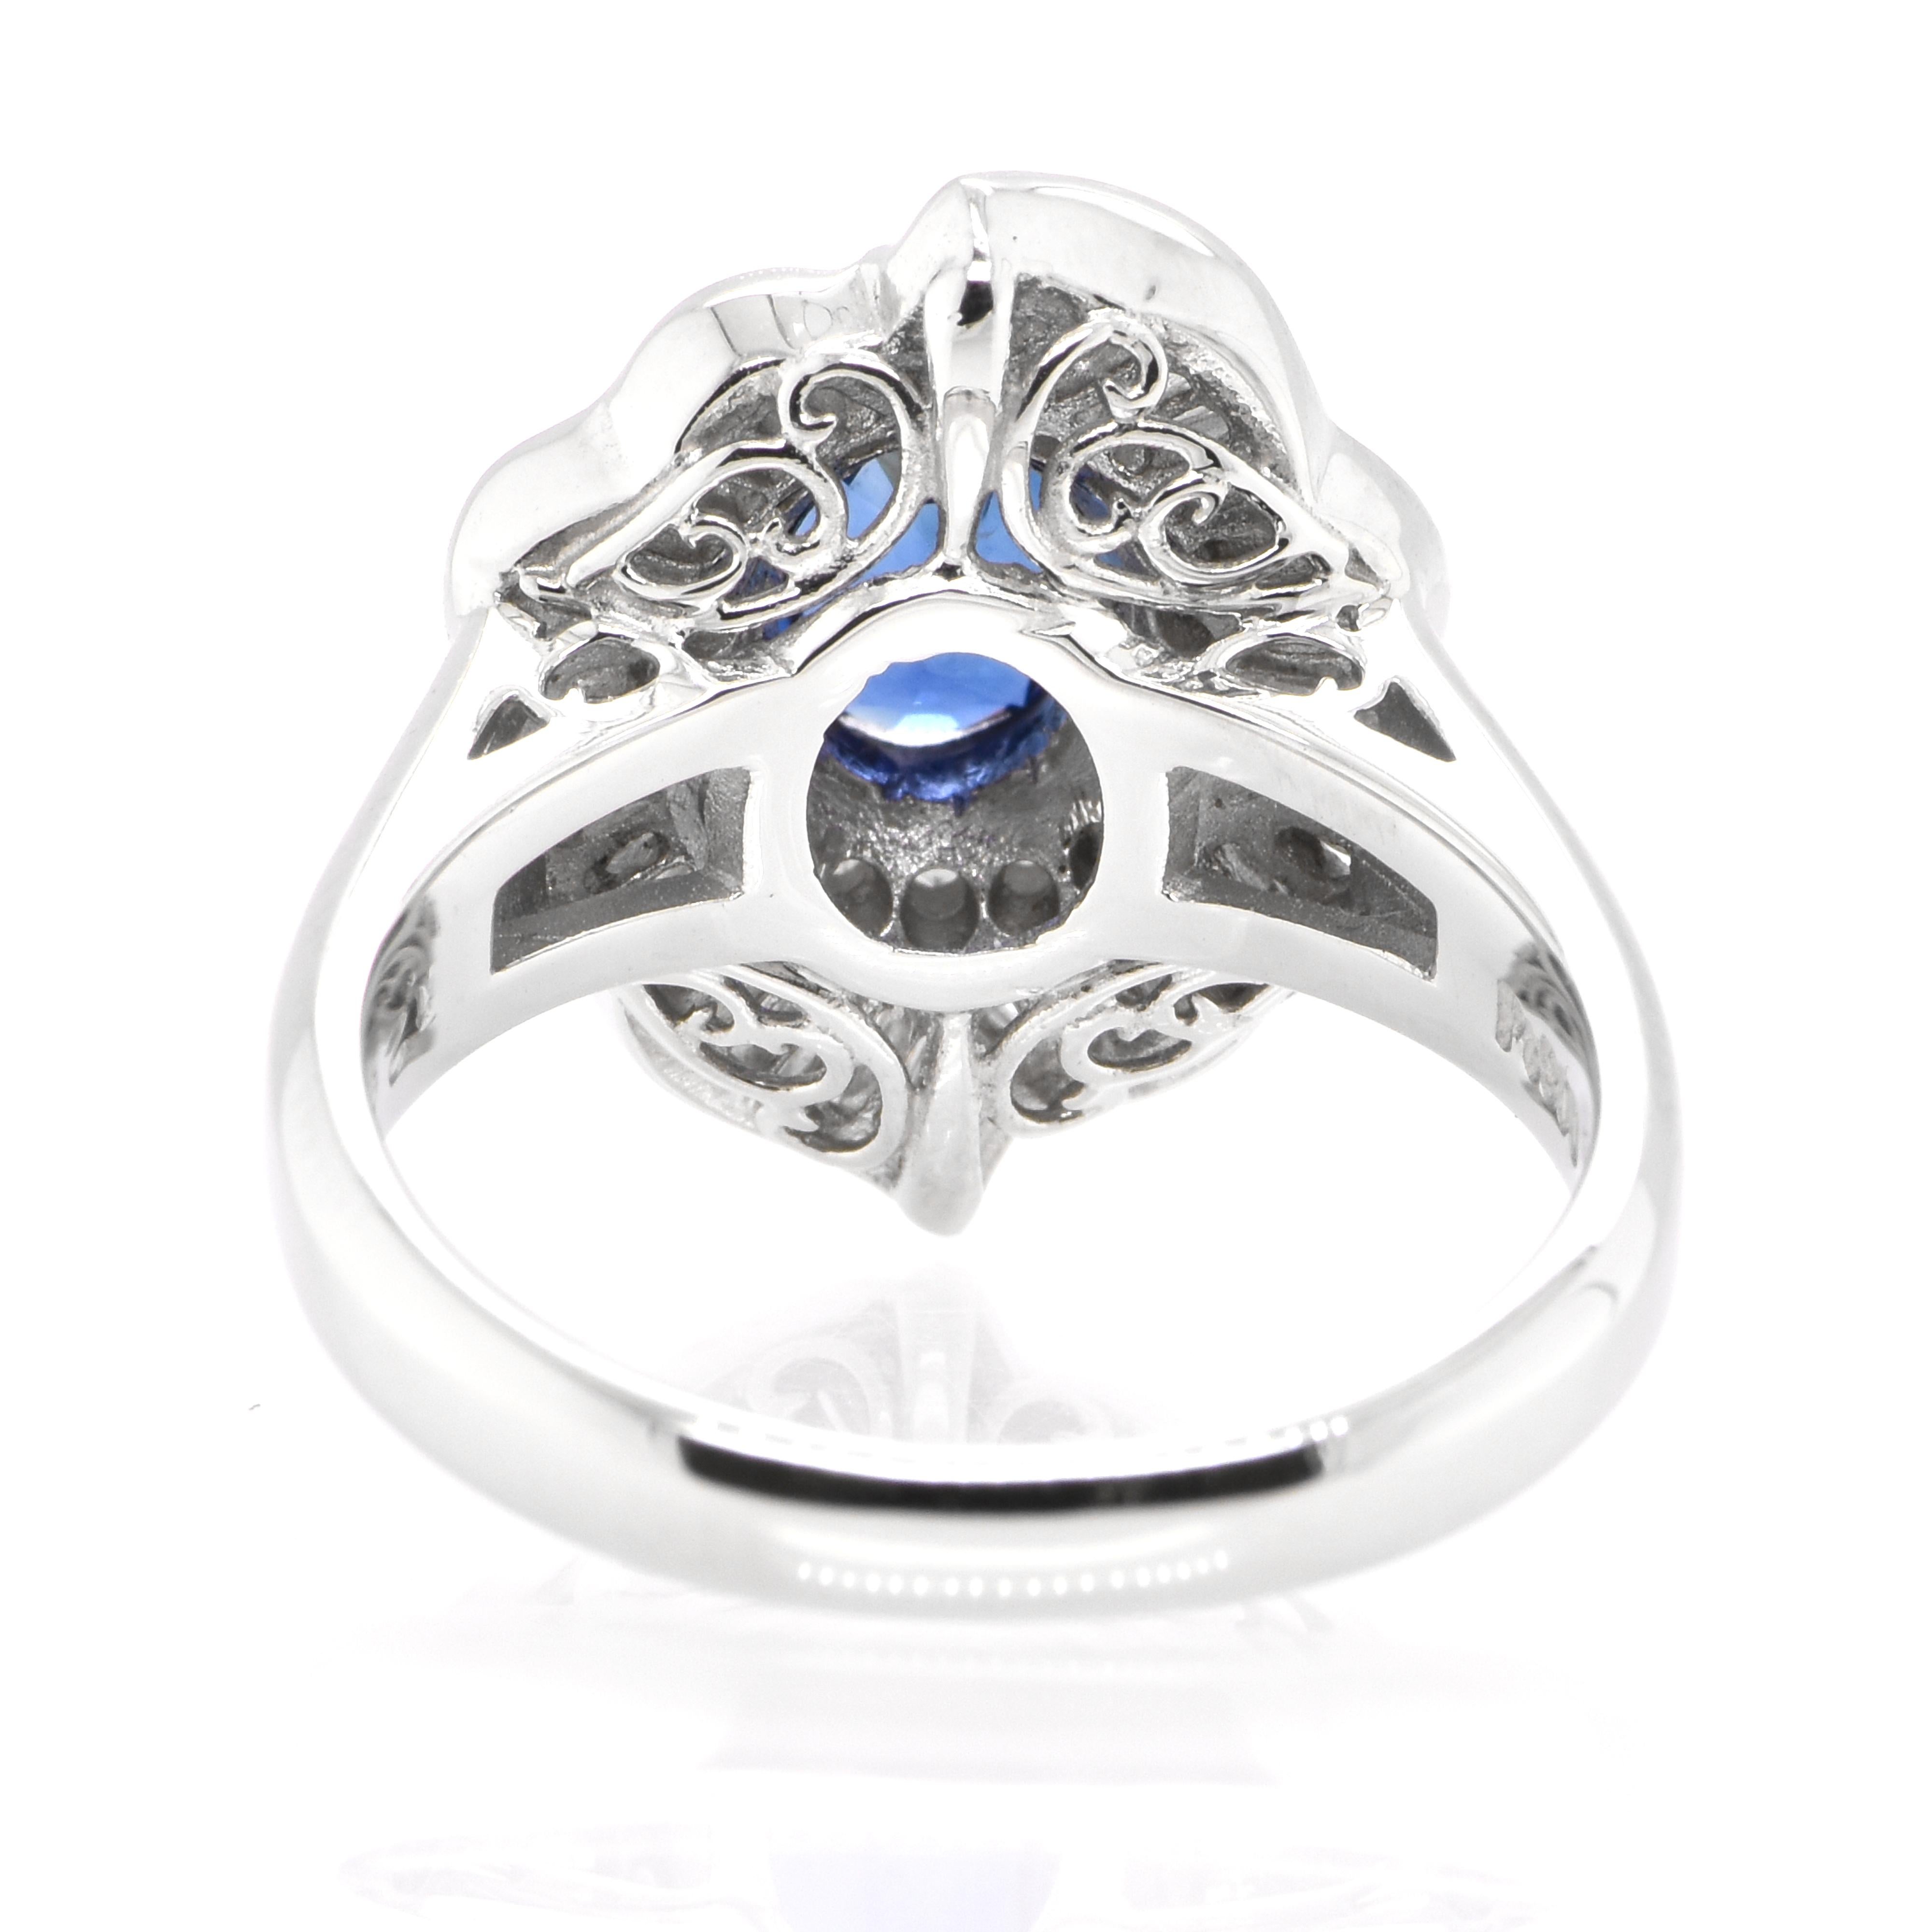 Women's 1.28 Carat Natural Sapphire and Diamond Vintage Ring Set in Platinum